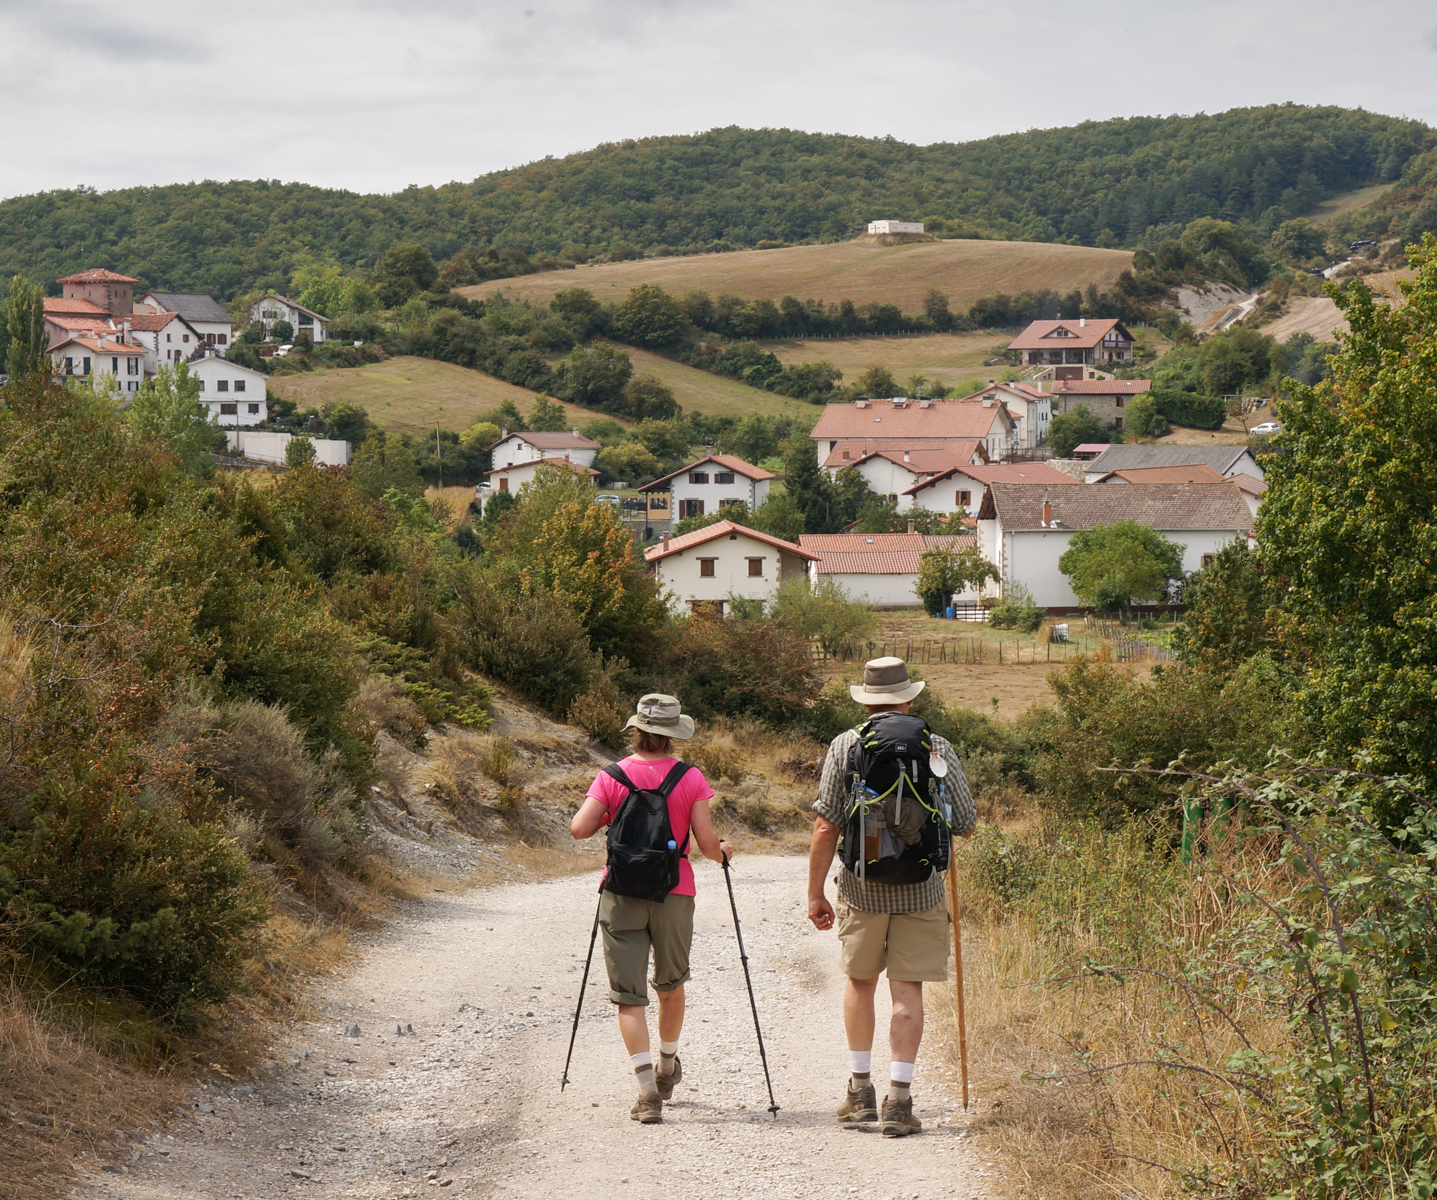 Pilgrims walk on the Camino Frances 1.5 km west of Viscarret, Spain | Photo by Mike Hudak